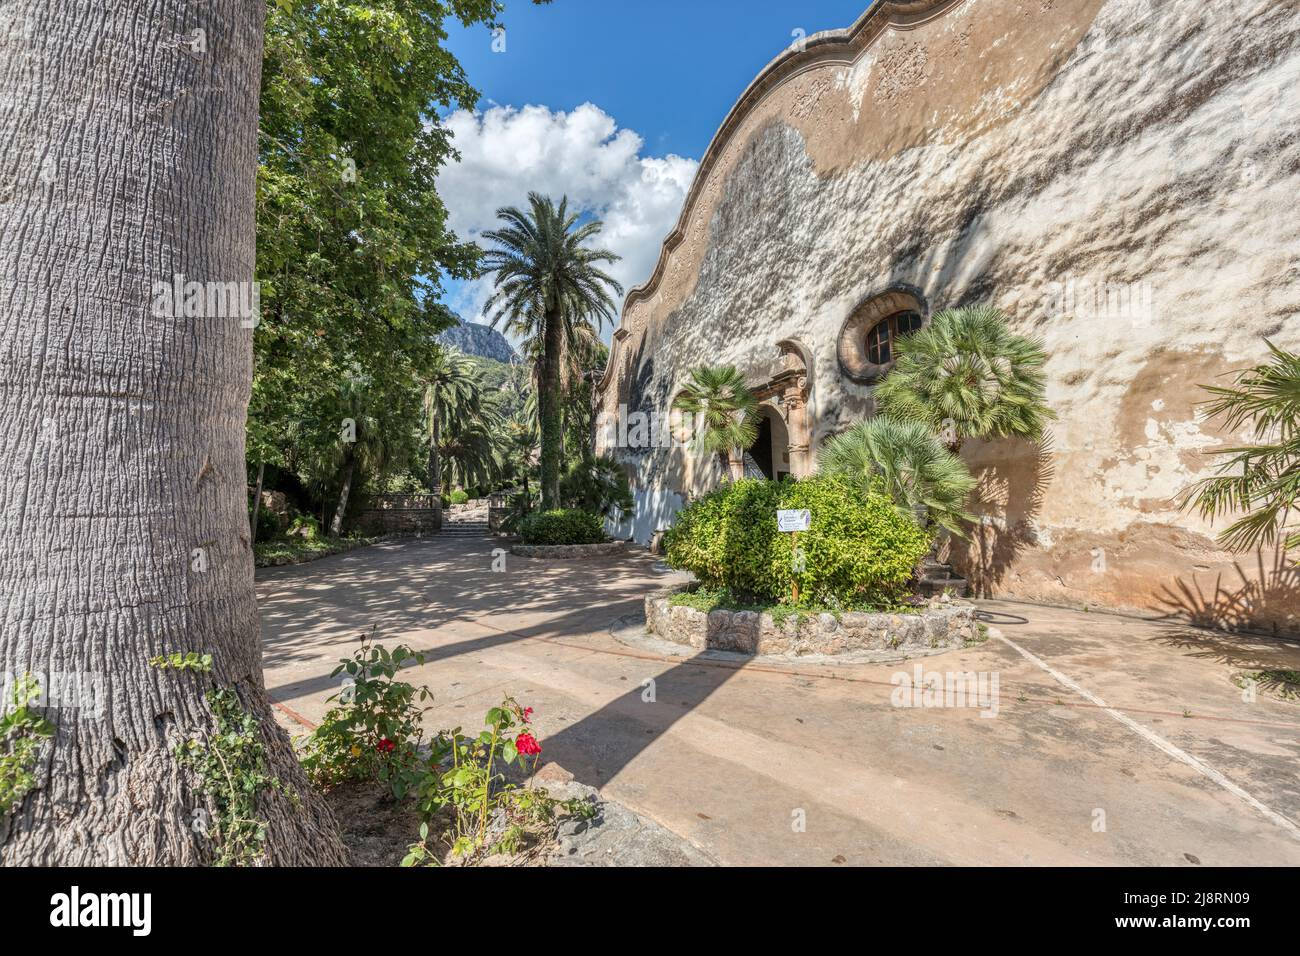 Entrance to Jardins d'Alfabia a historic gothic house, gardens and fountains near Bunyola, in the UNESCO world heritage Serra de Trumantana mountains. Stock Photo